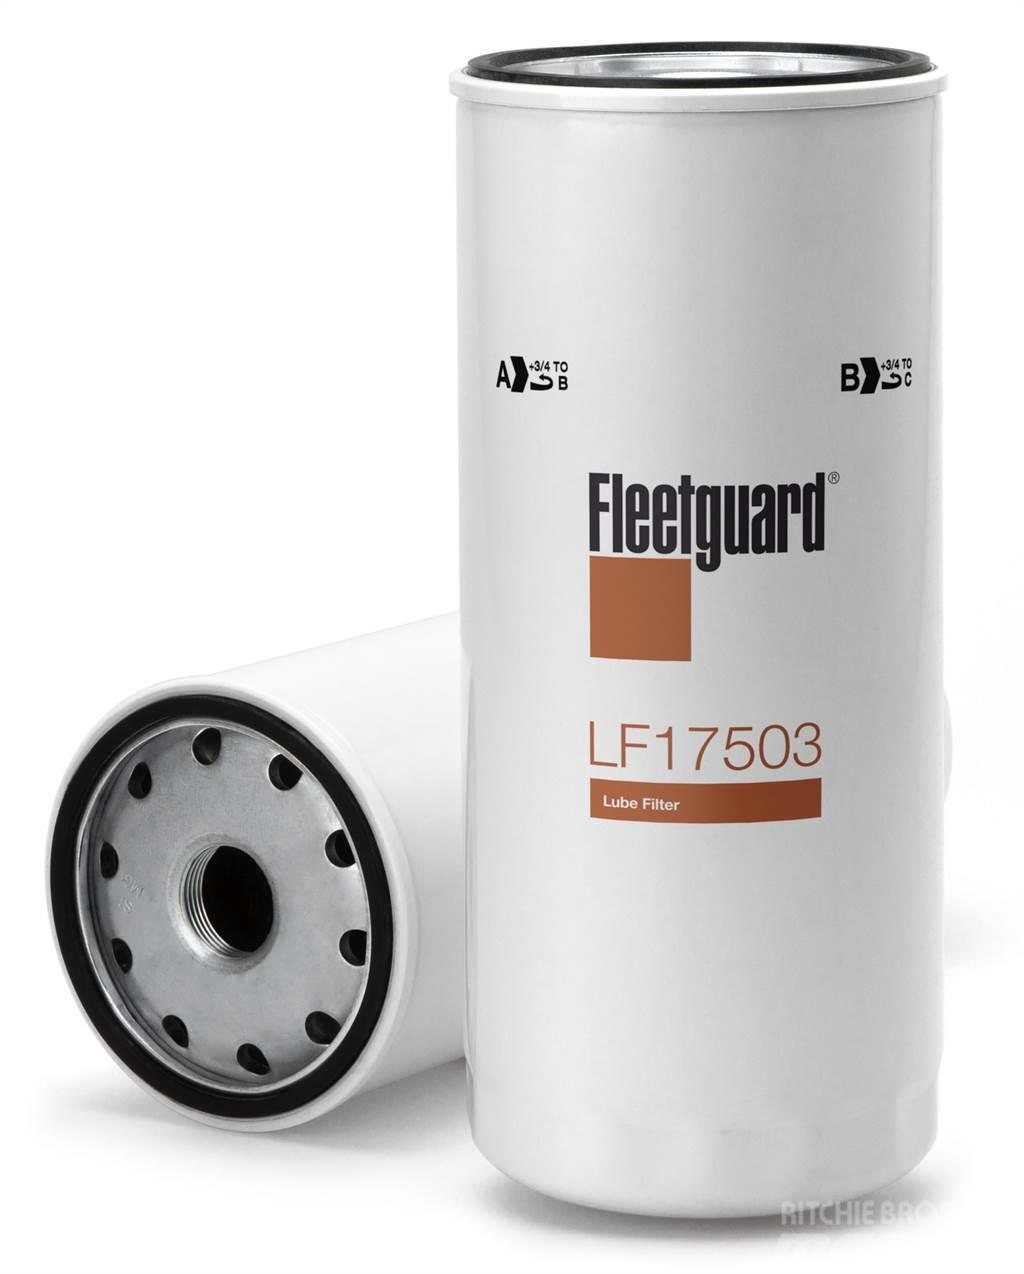 Fleetguard oliefilter LF17503 其他